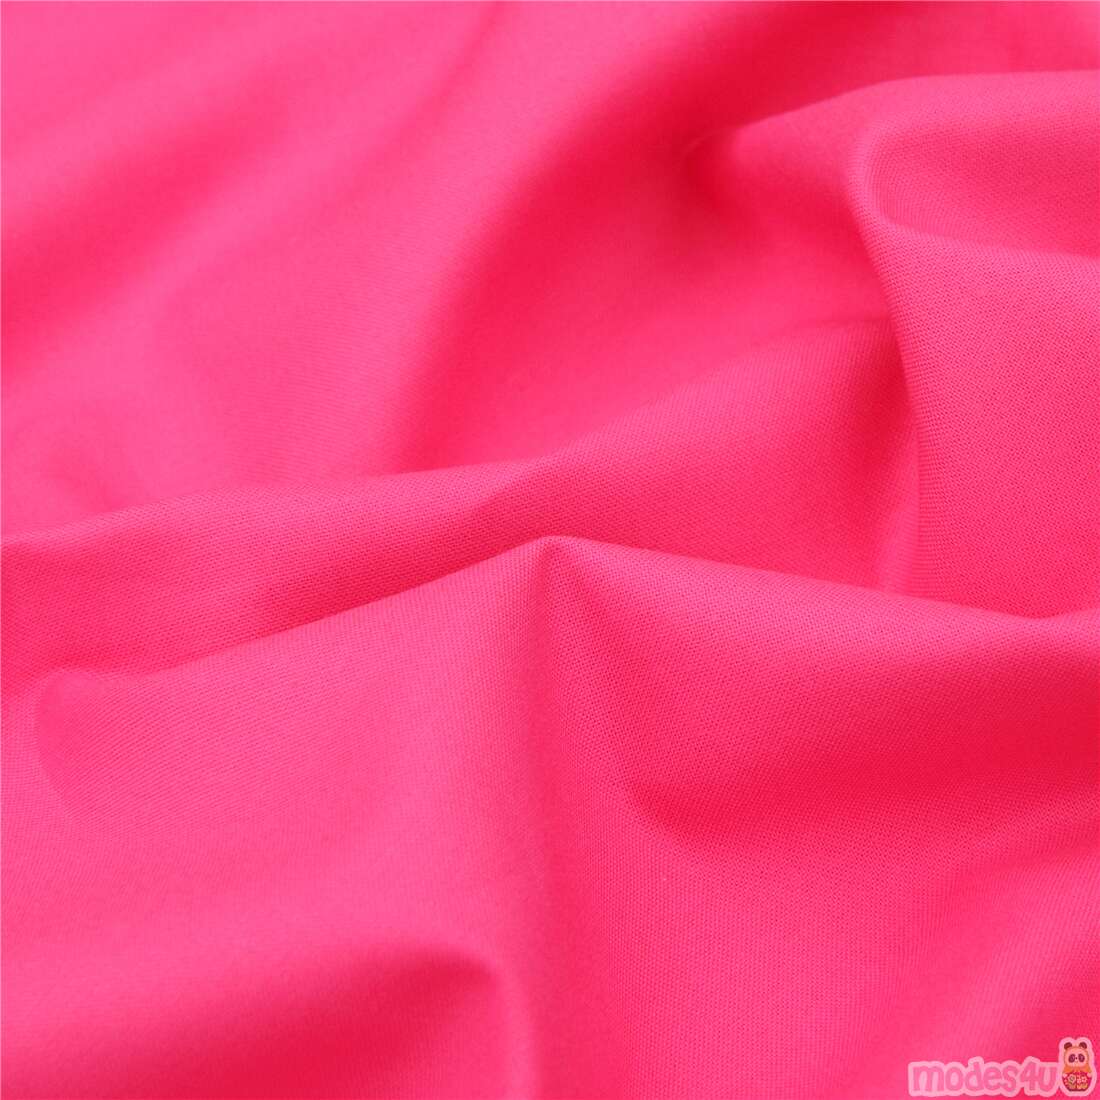 Bright Pink Per Metre Cotton Fabric Robert Kaufman Kona Cotton Solid